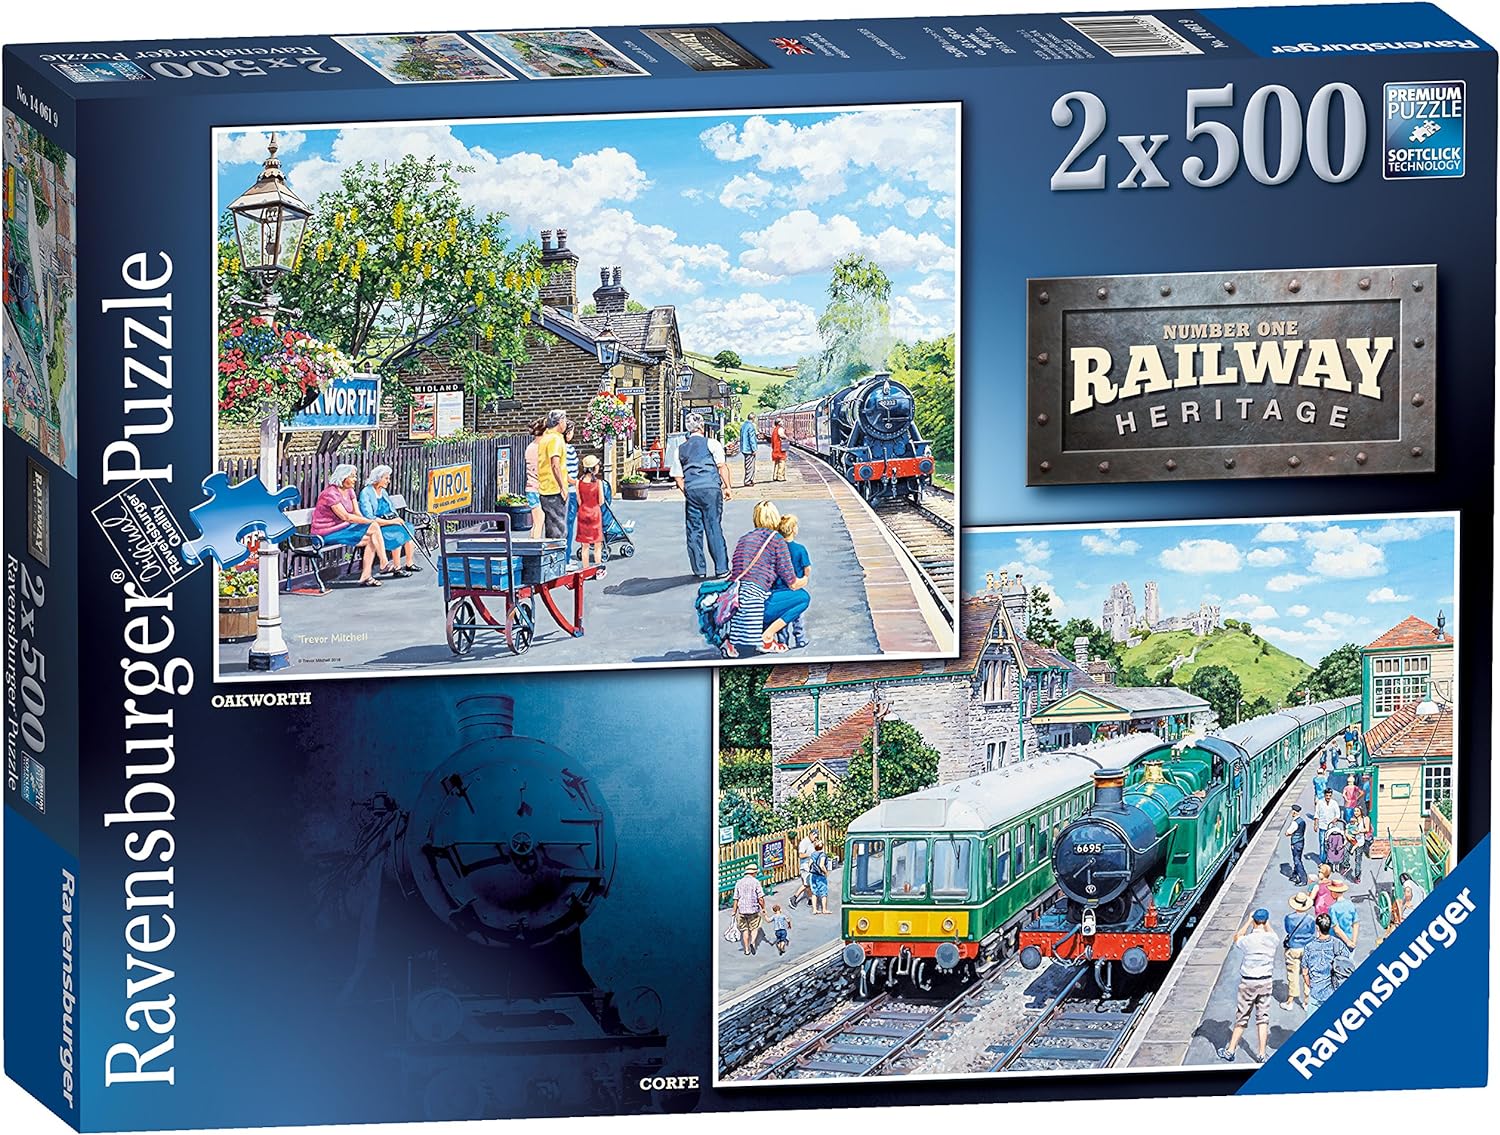 Ravensburger 2x500 Piece Jigsaw Puzzles - Railway Heritage - Corfe and Oakworth Railway Stations - 140619